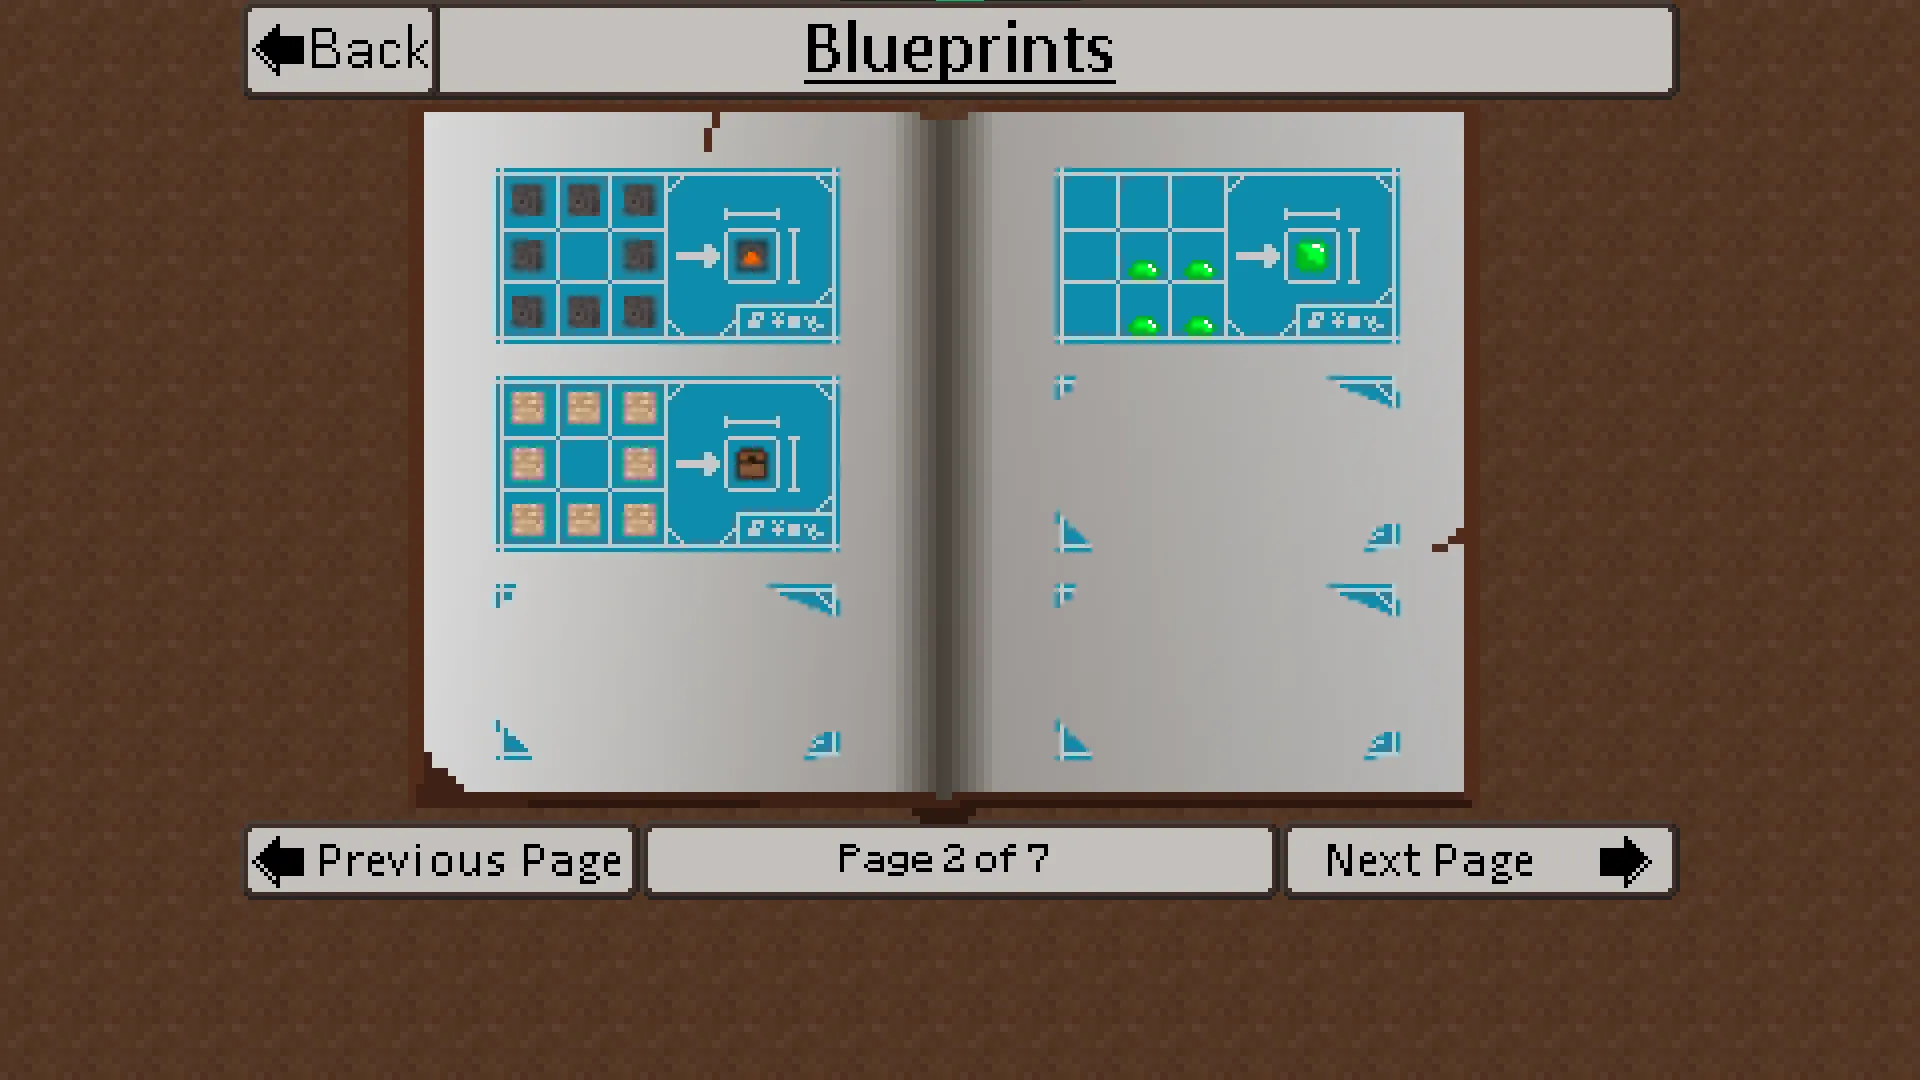 Blueprints screen